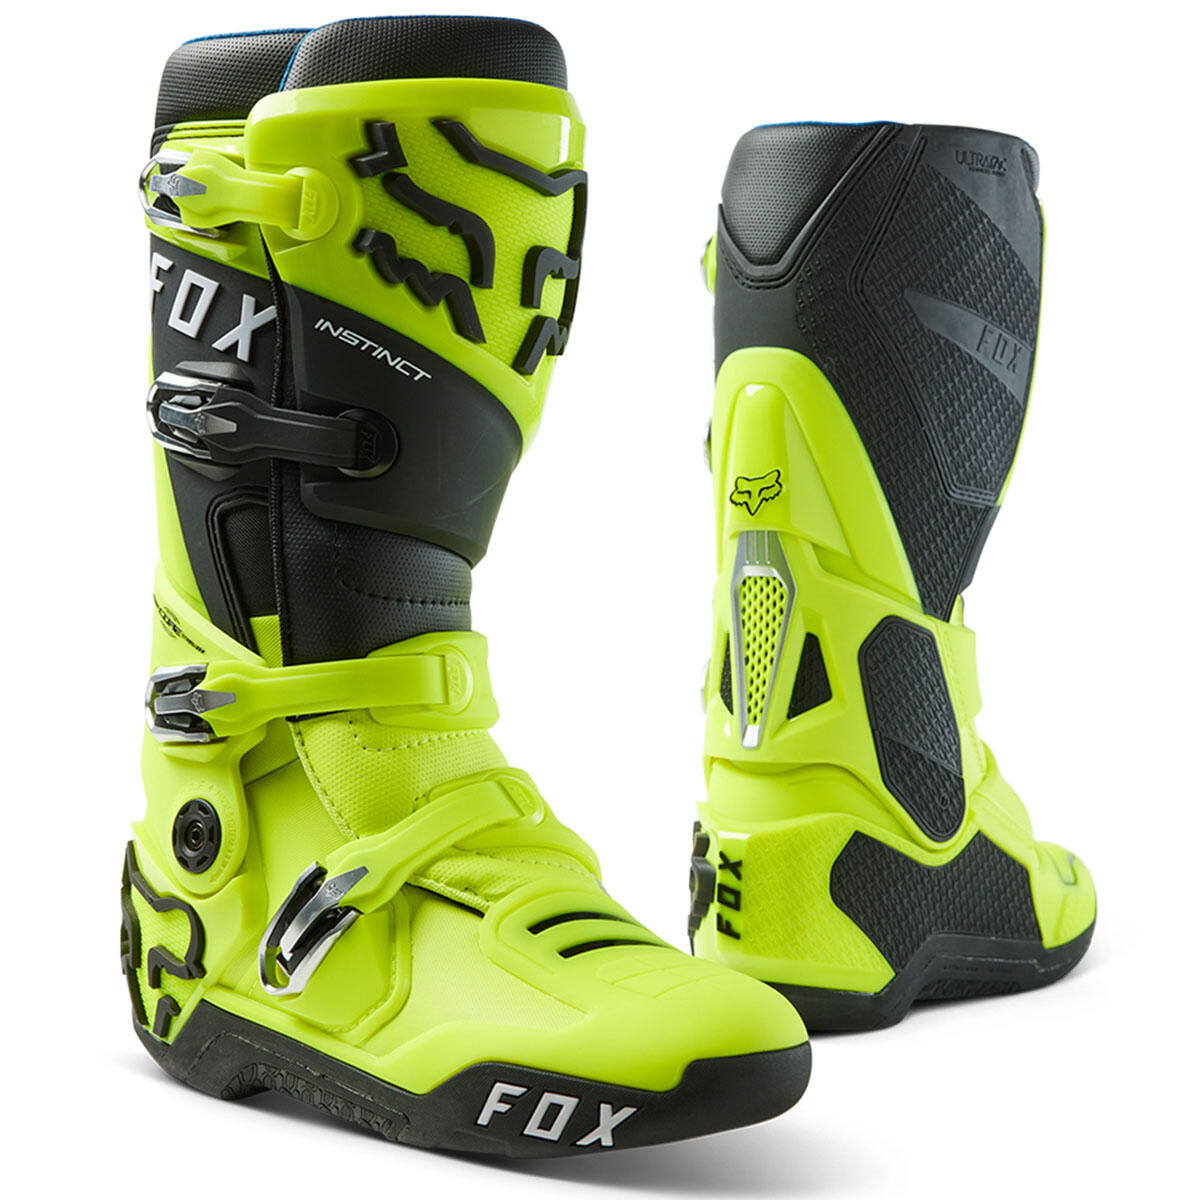 Shop Motocross Boots Low Price Fox online